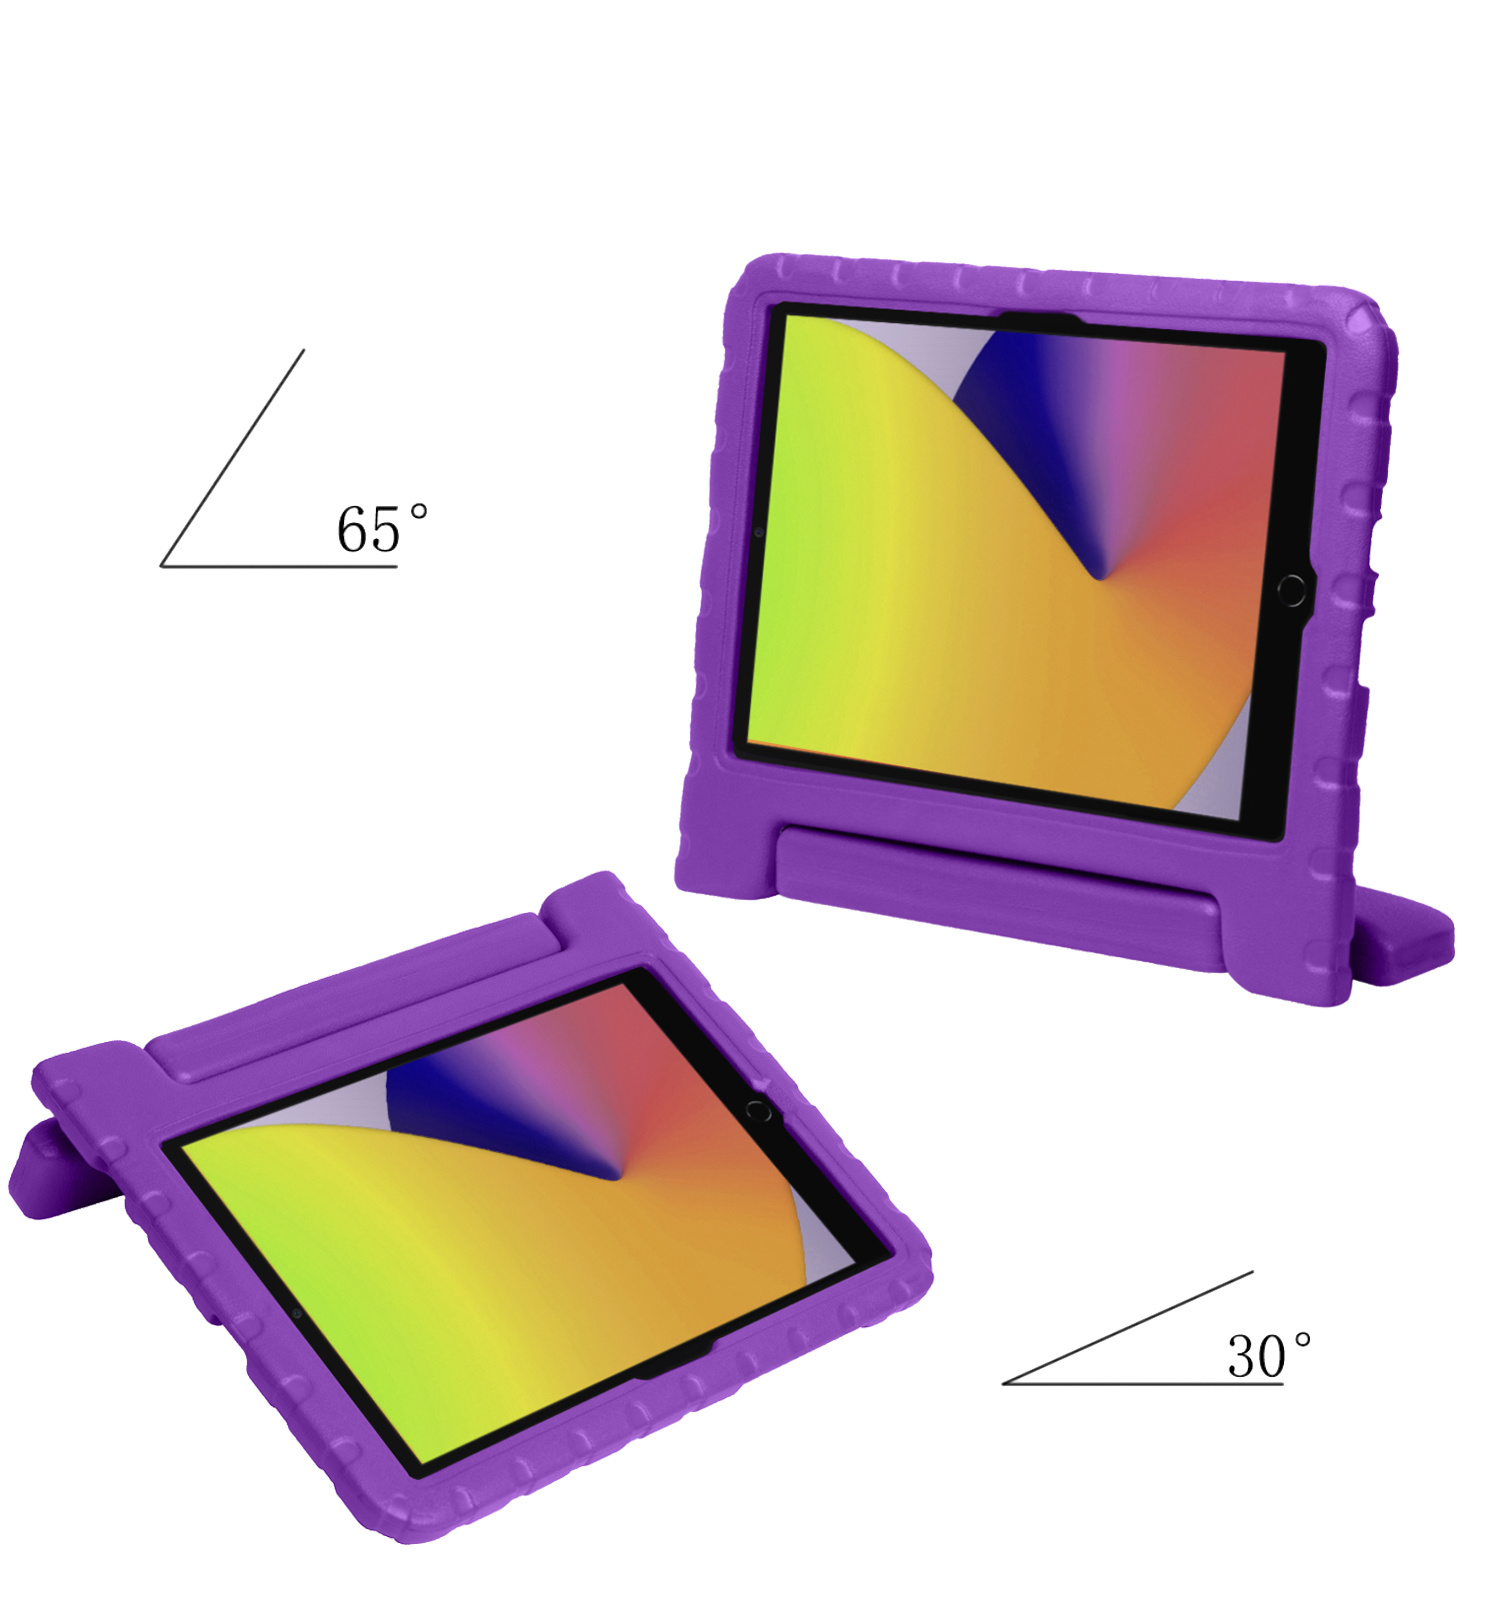 Nomfy iPad 10.2 2019 Hoes Bumper Kindvriendelijk Kids Case - iPad 10.2 Hoesje Shockproof Cover Hoes - Paars